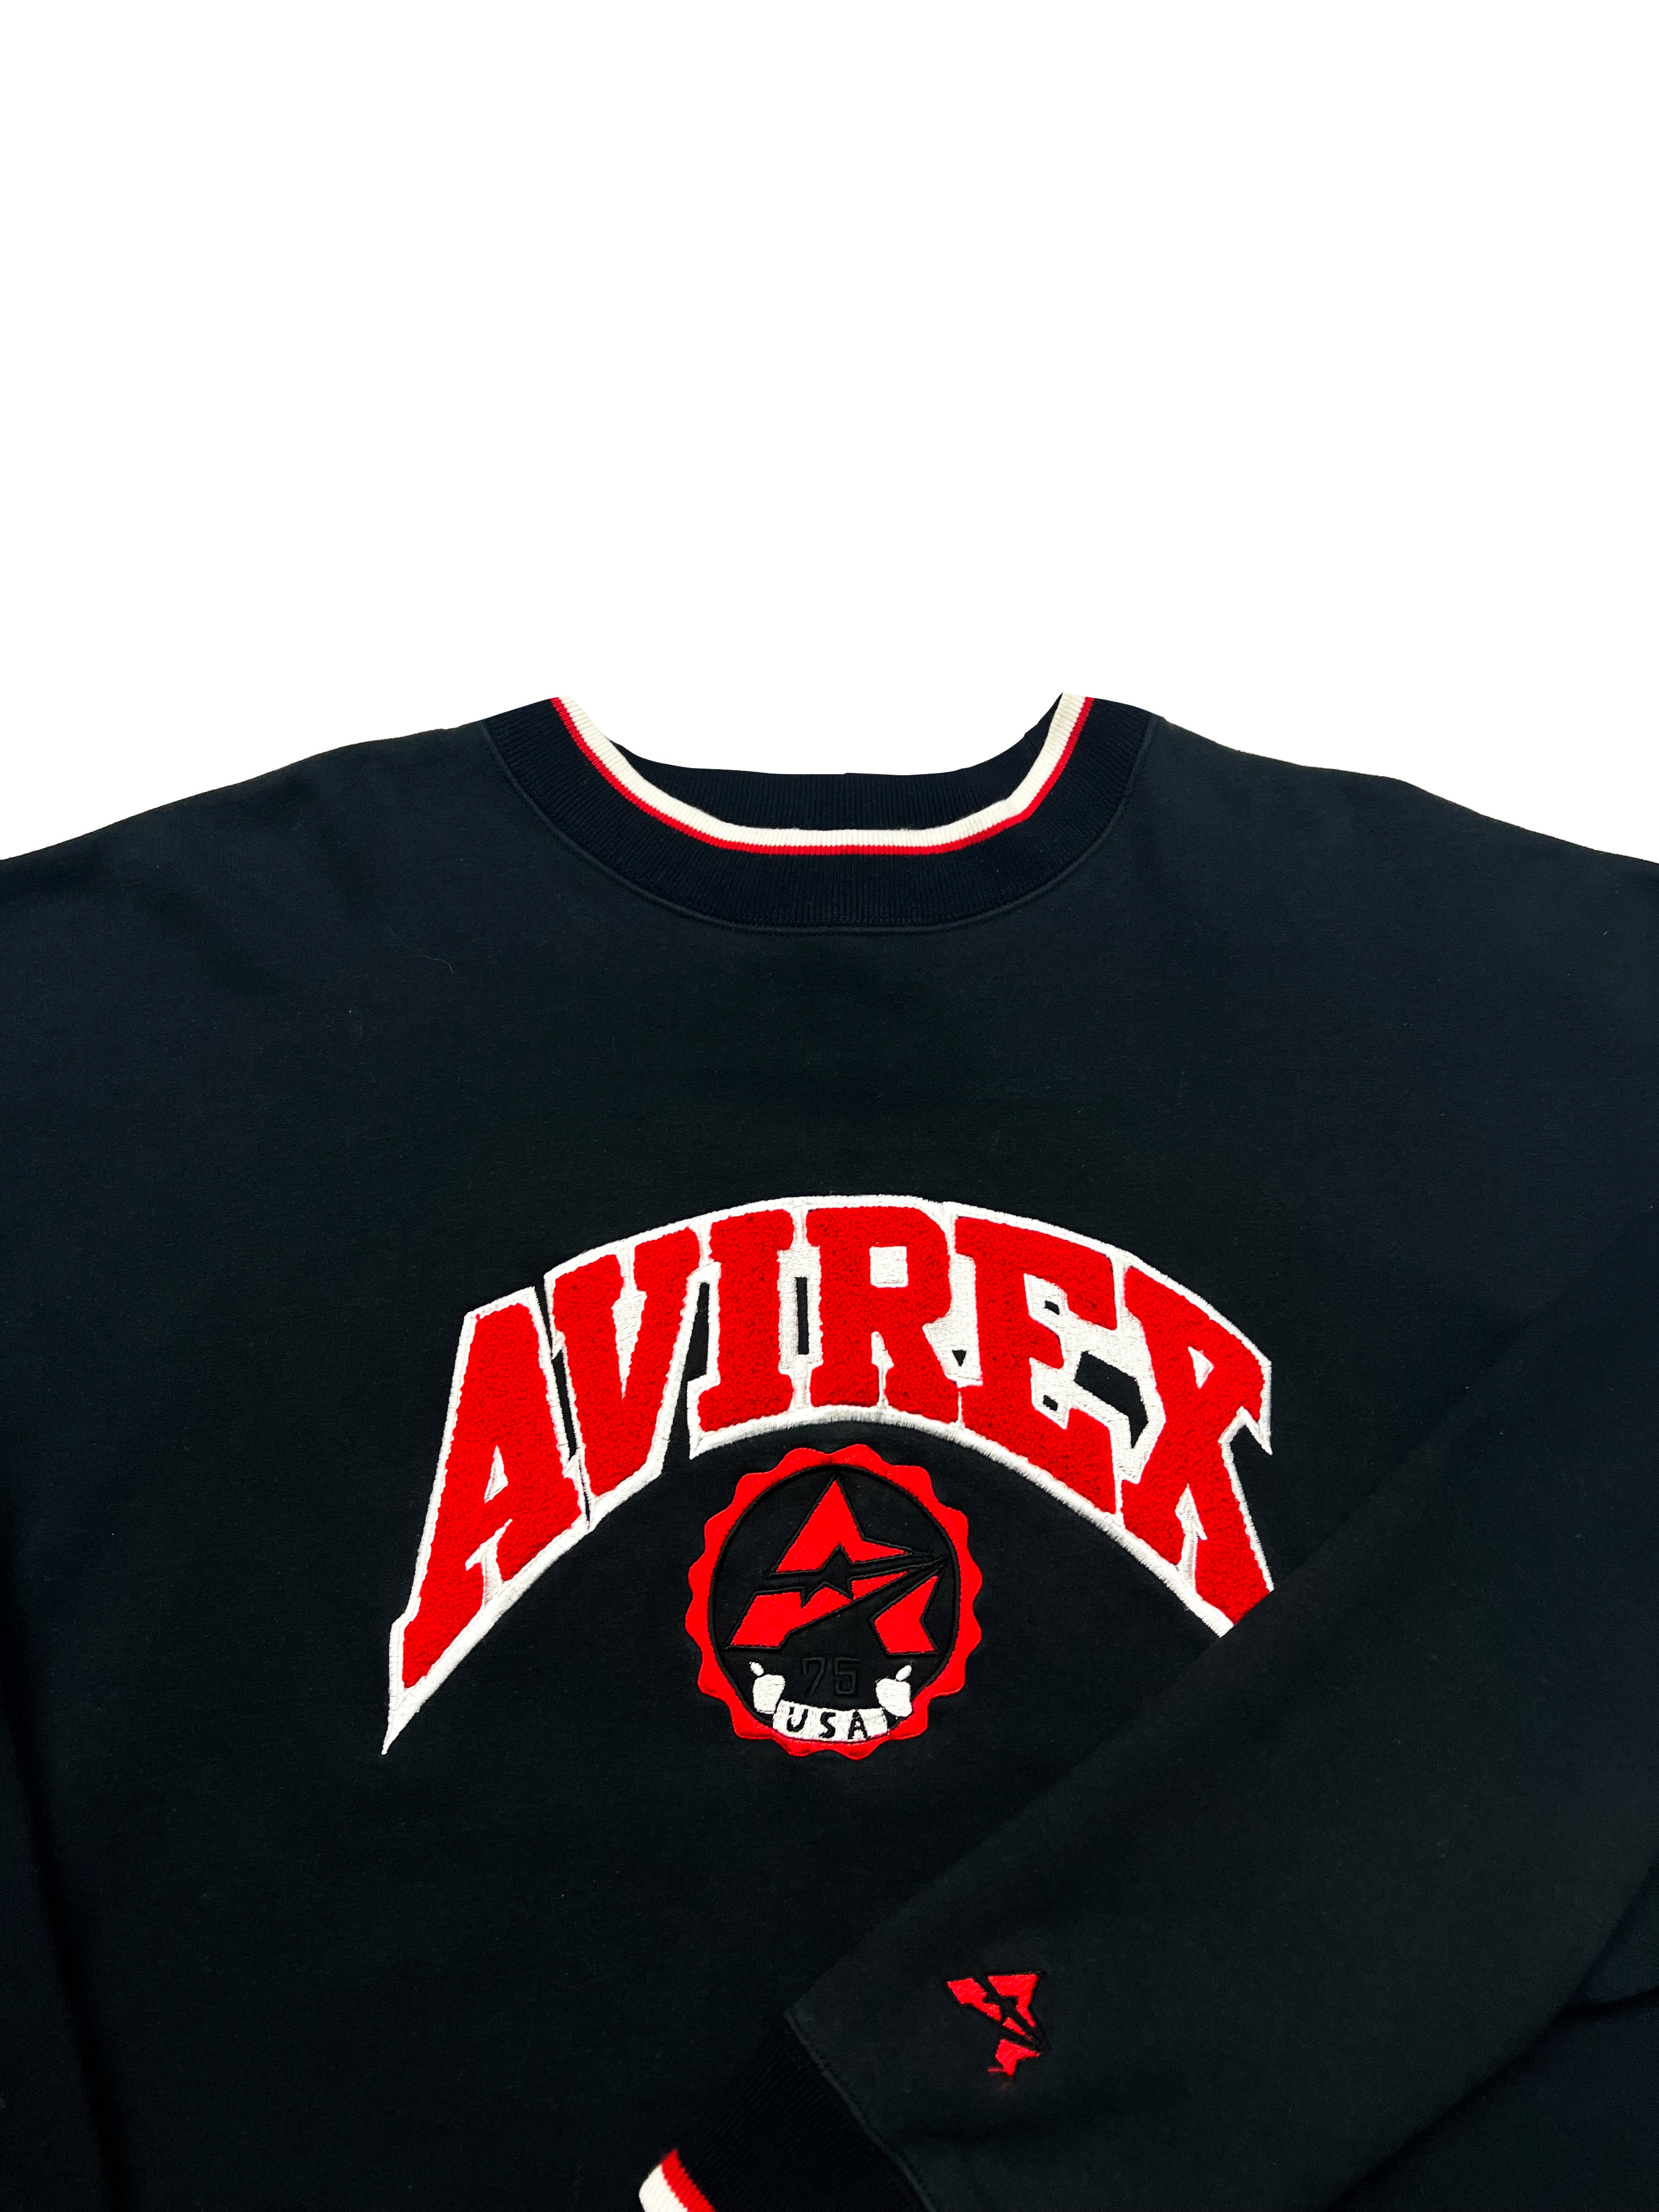 Avirex Black & Red Spell Out Jumper 90's